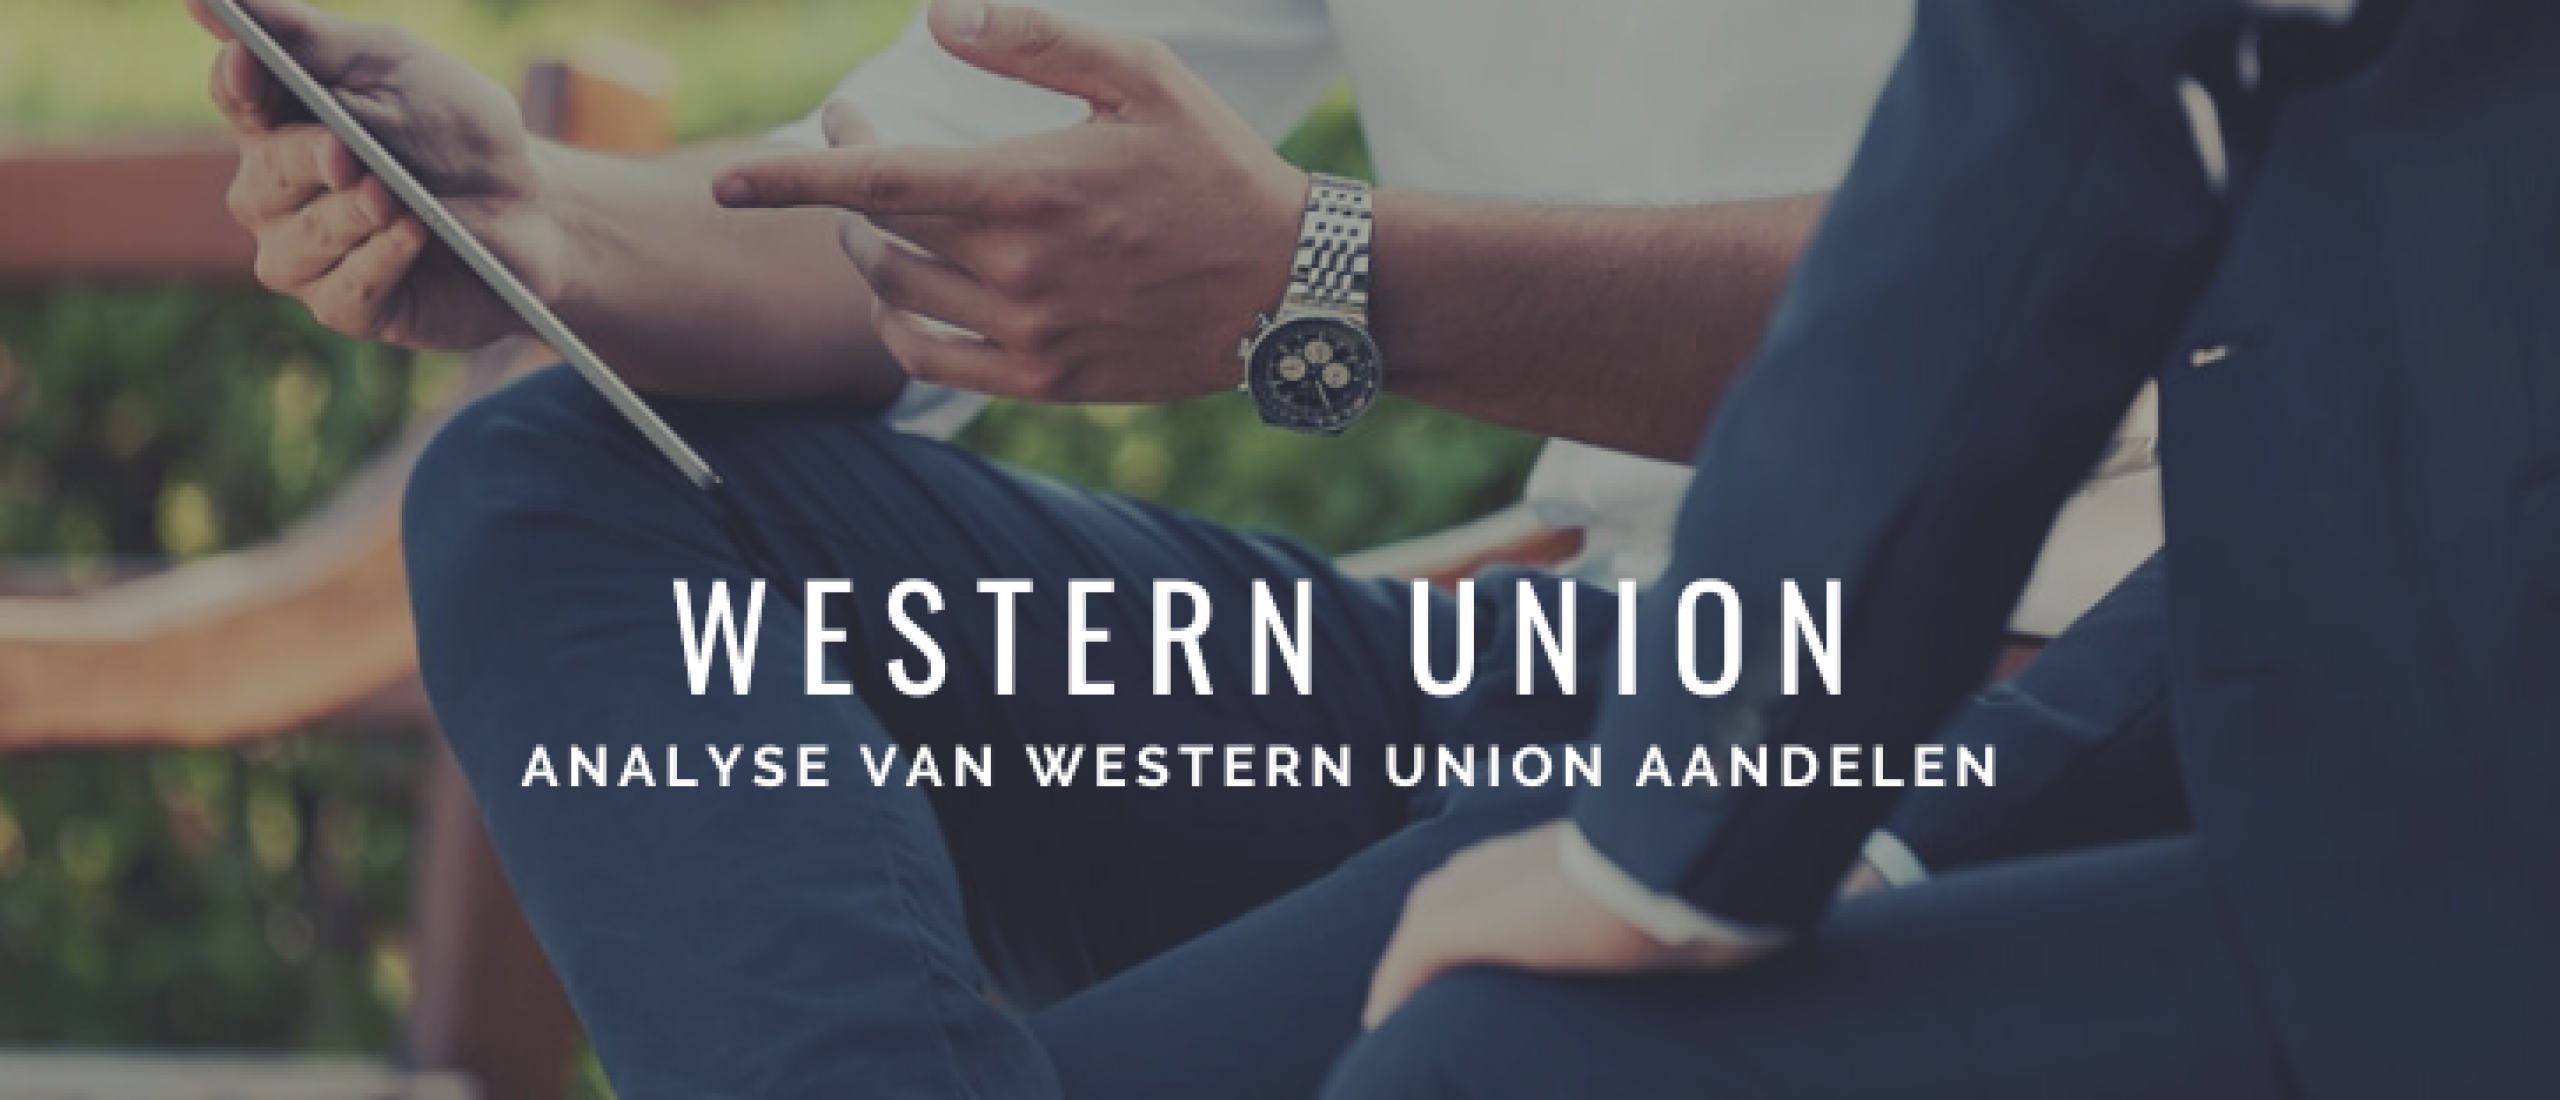 Western Union Aandelen kopen? Analyse +9% dividend en +30% Groei | Happy Investors